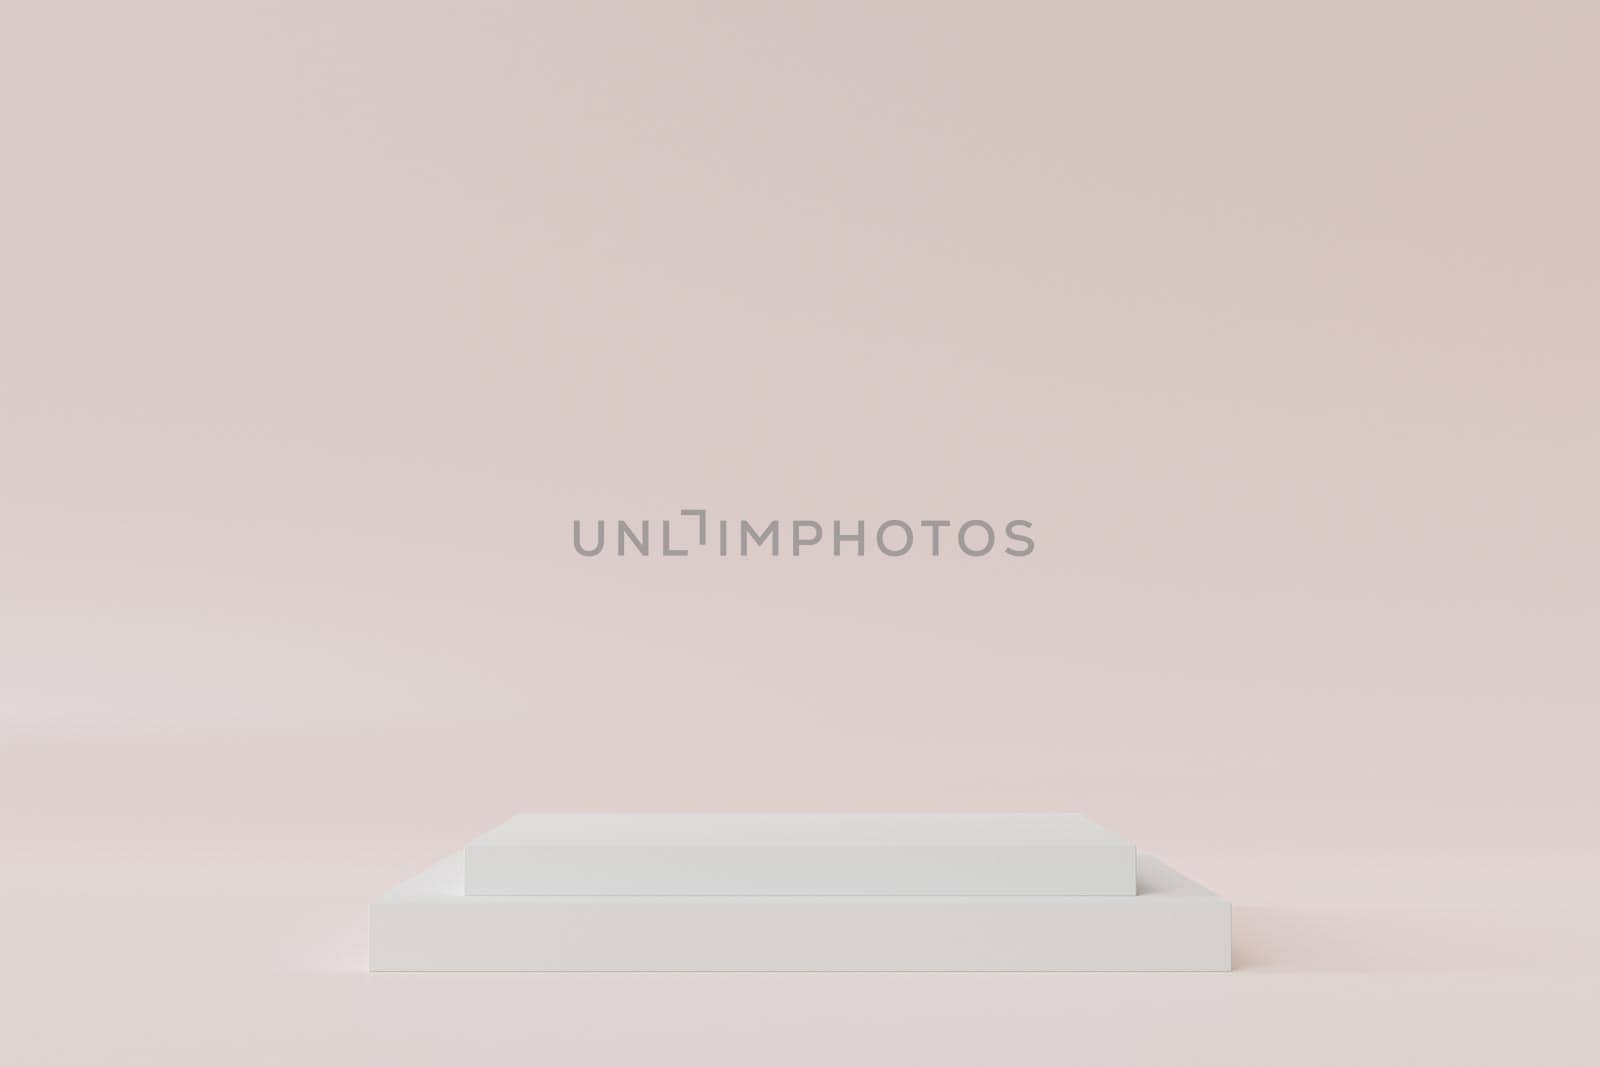 Square podium or pedestal for products or advertising on beige background, minimal 3d illustration render